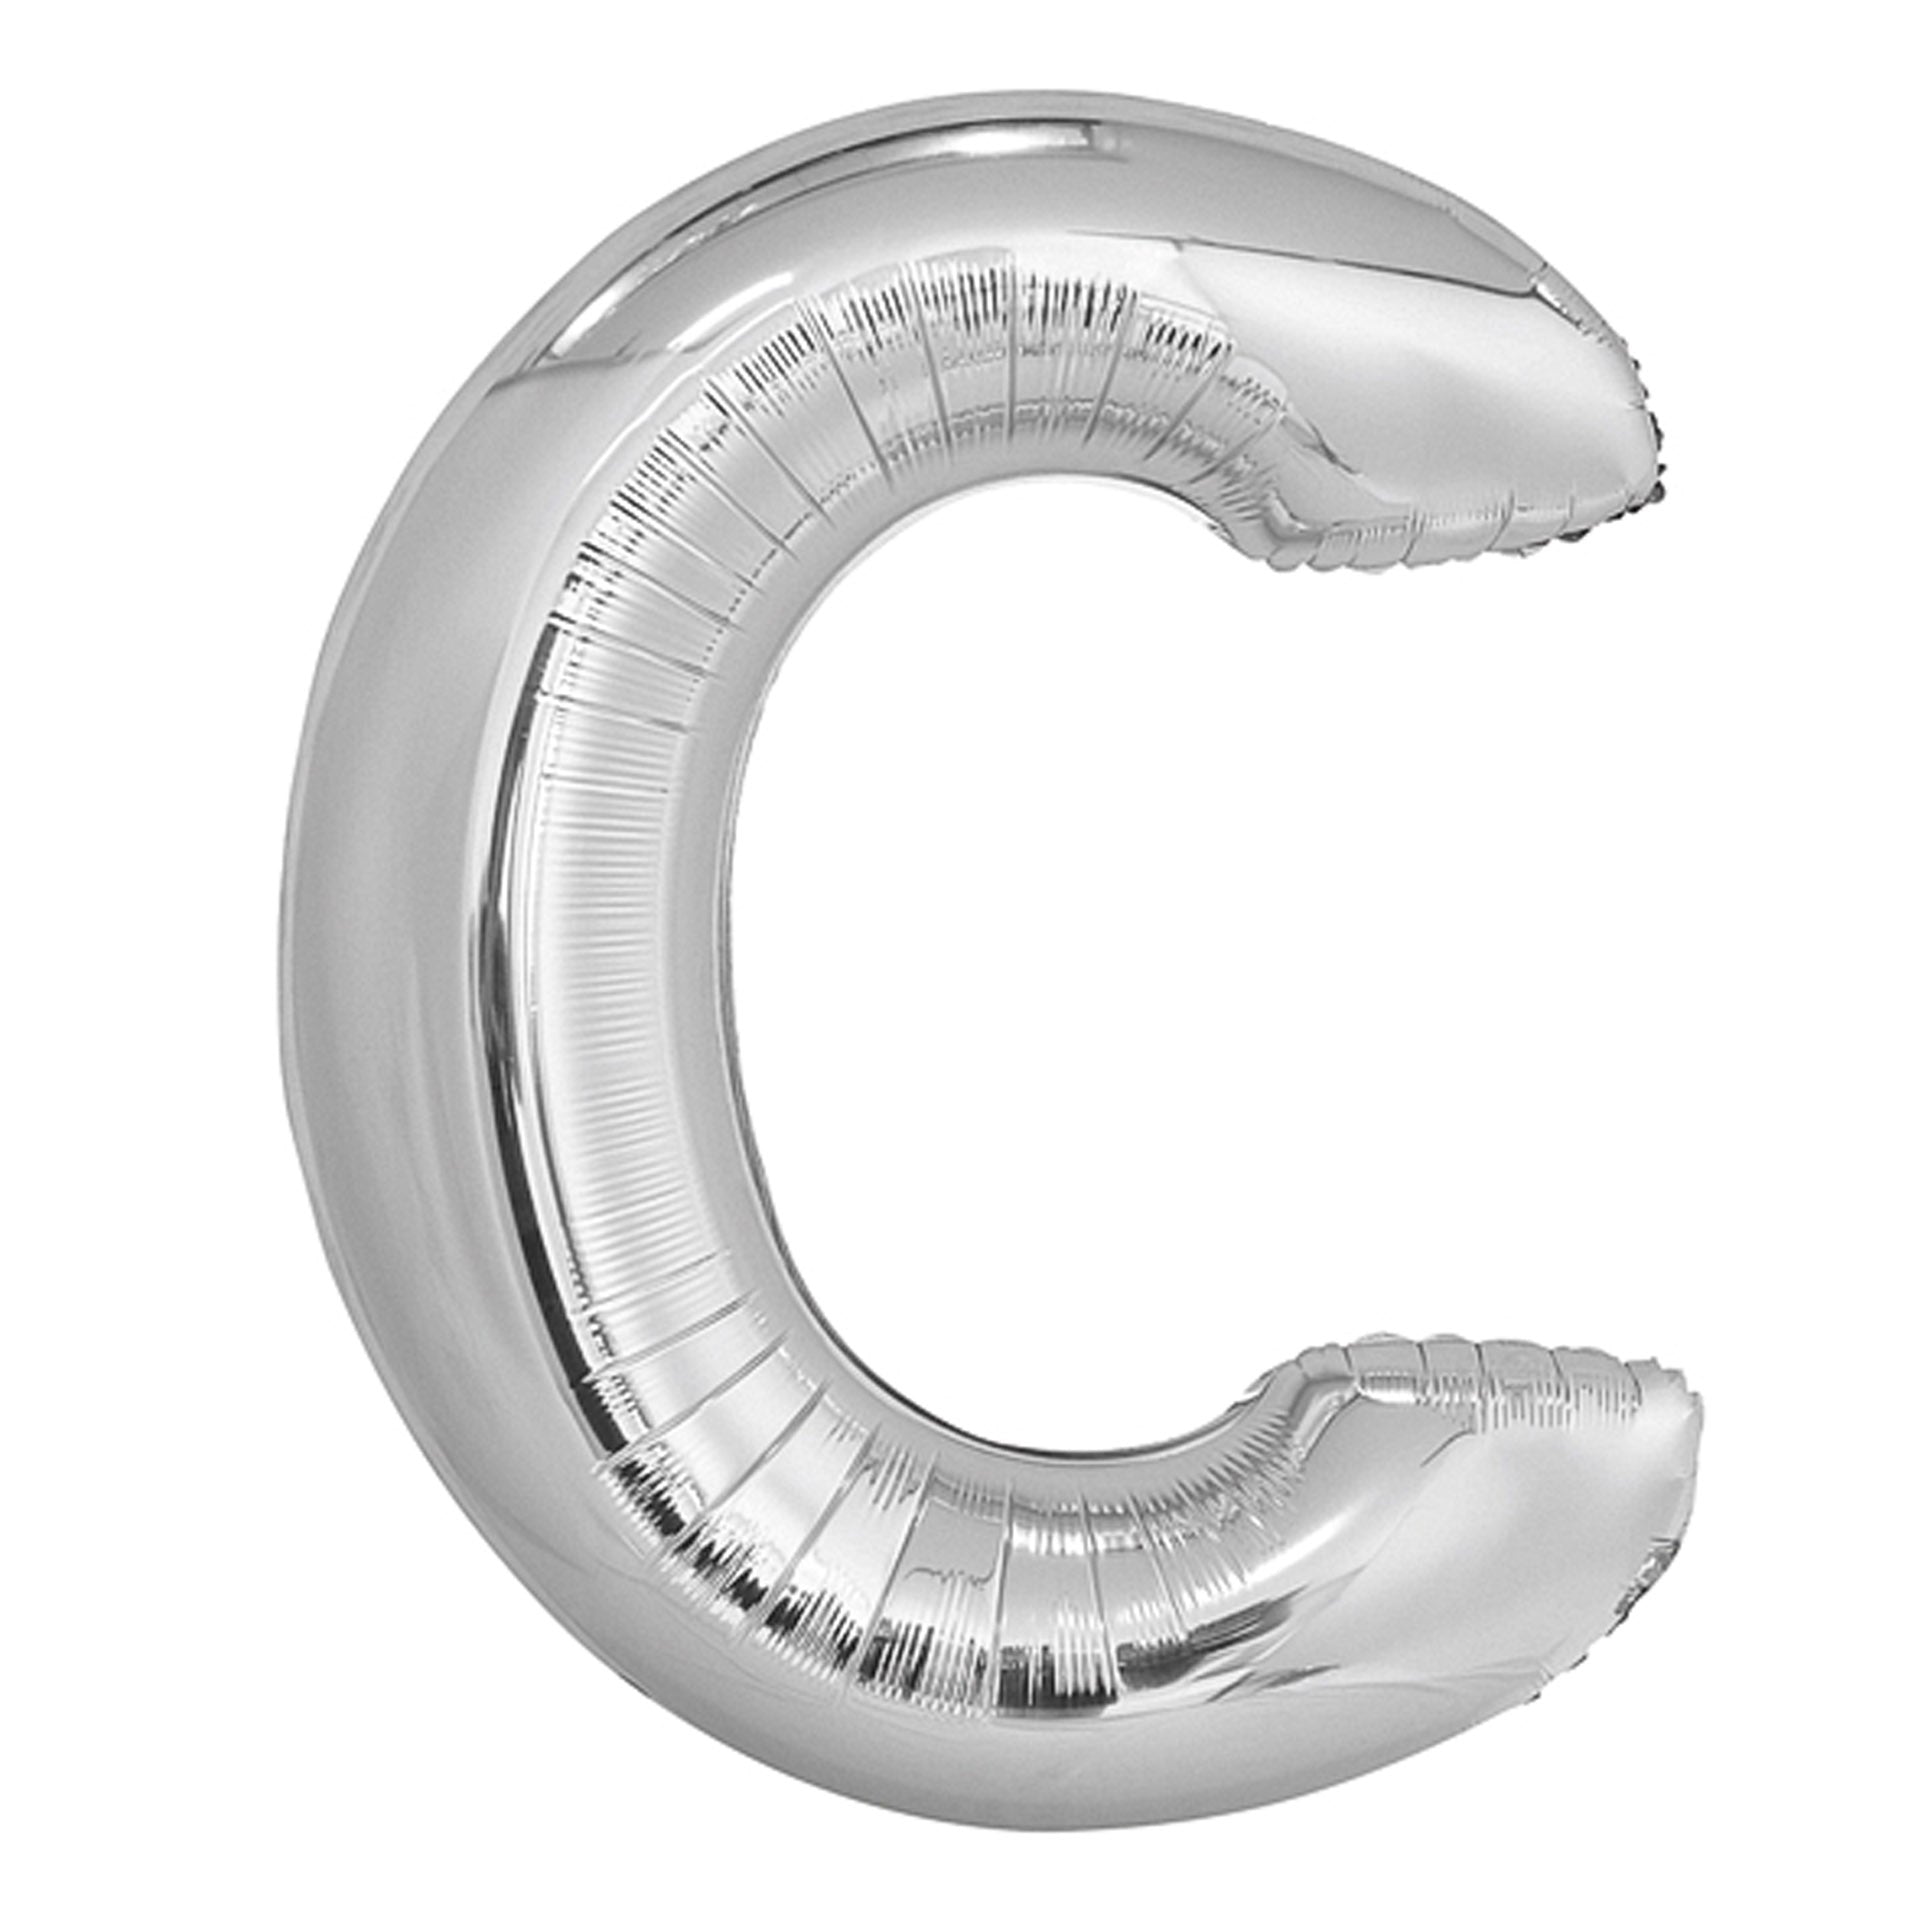 Letter C silver foil balloon for sale online in Dubai